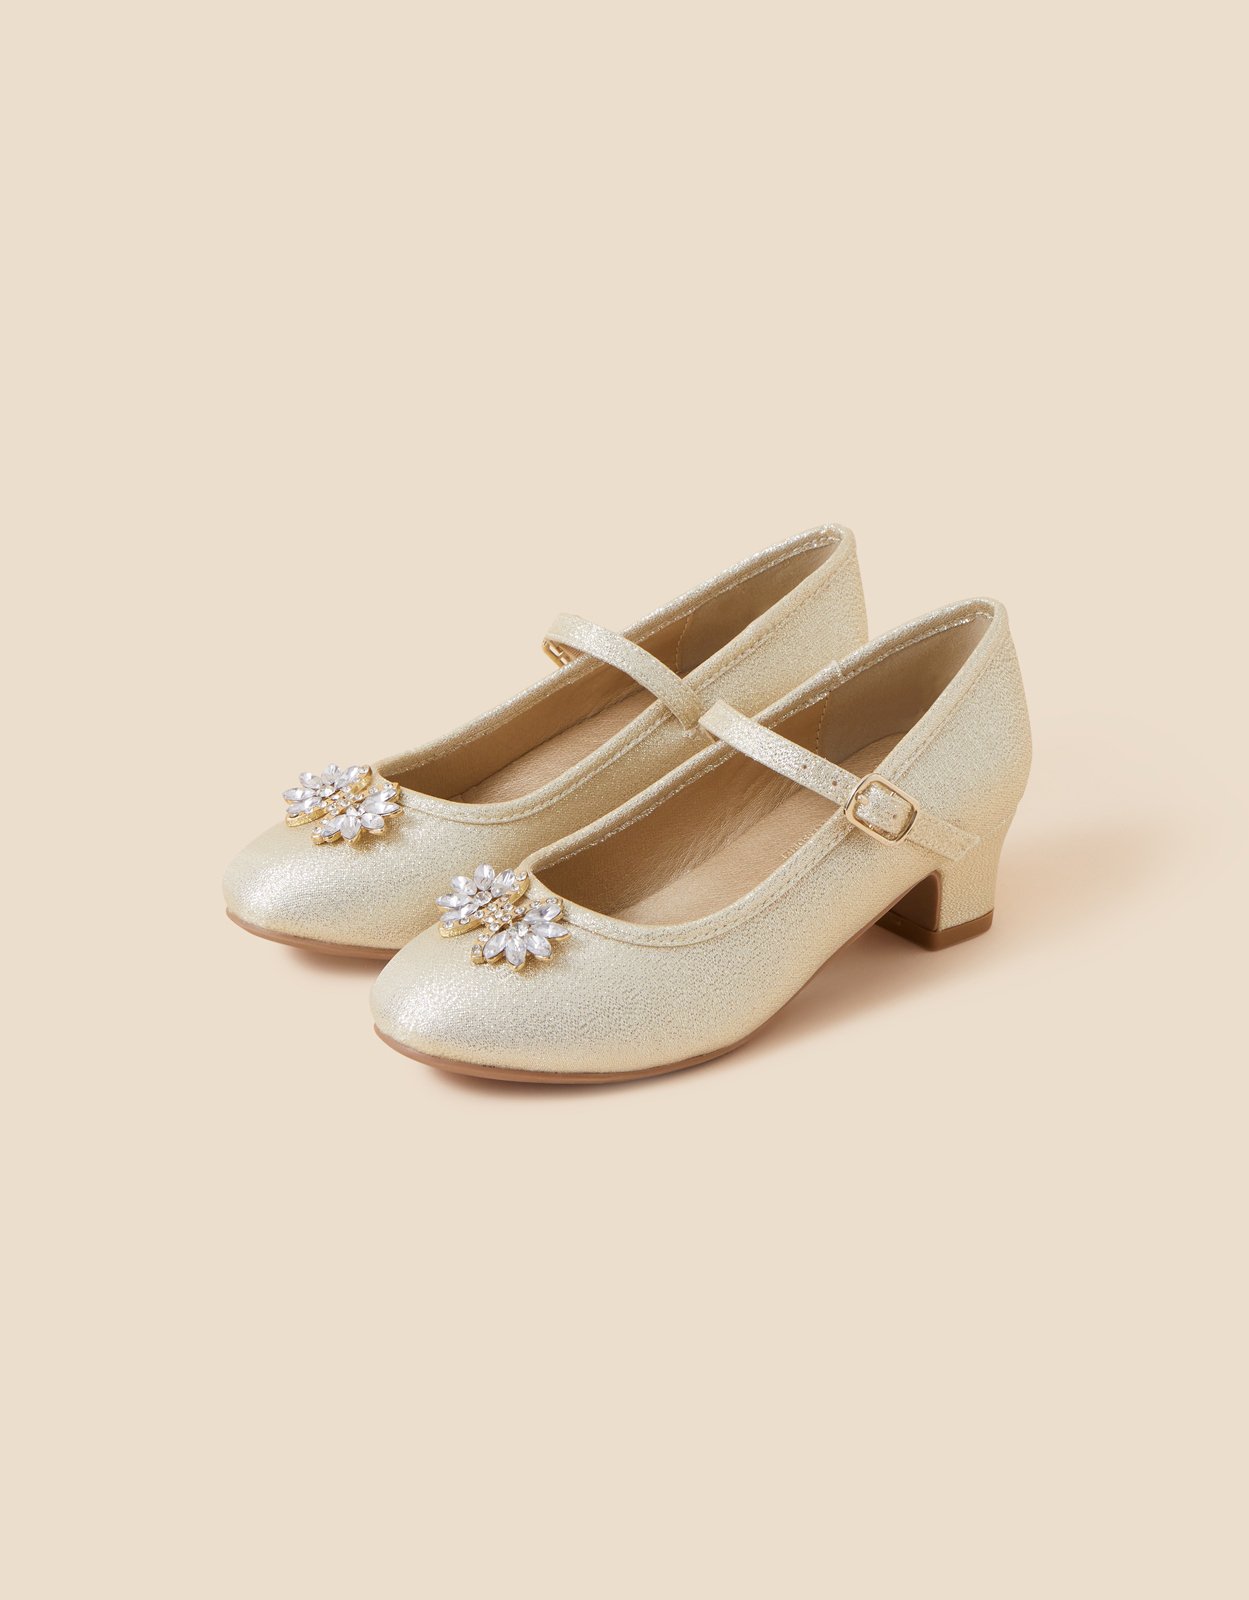 Accessorize Girl's Girls Shimmer Gem Flamenco Shoes Gold, Size: 9